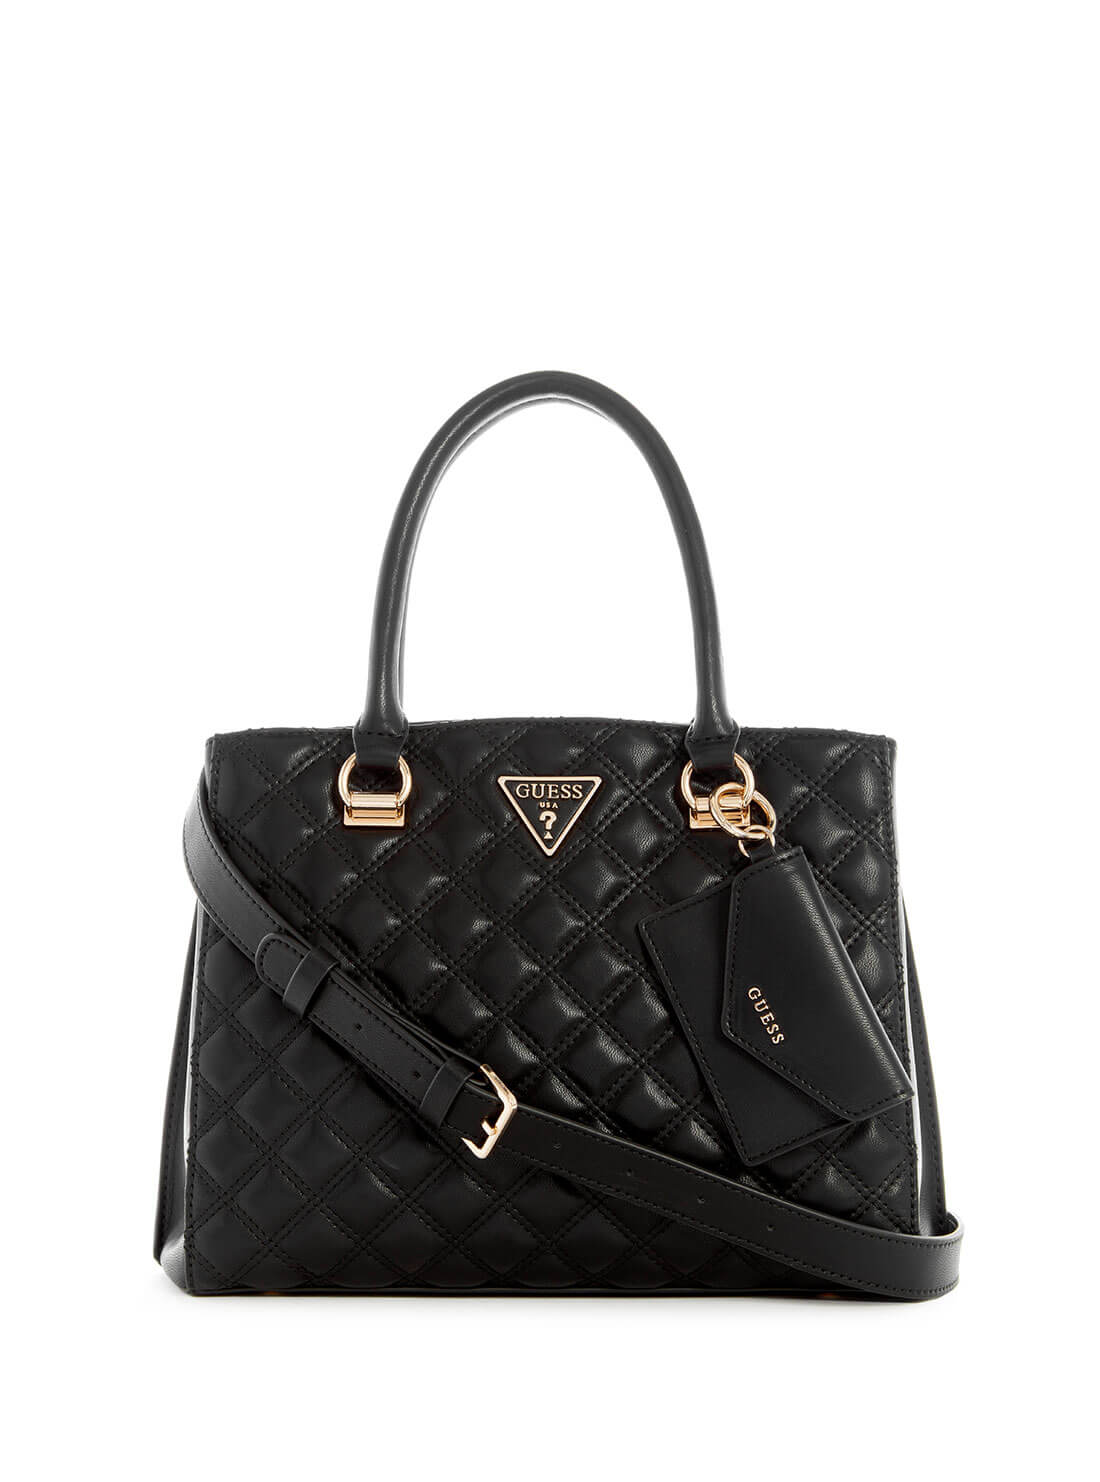 Black Girlfriend Satchel Bag | GUESS Women's Handbags | front view